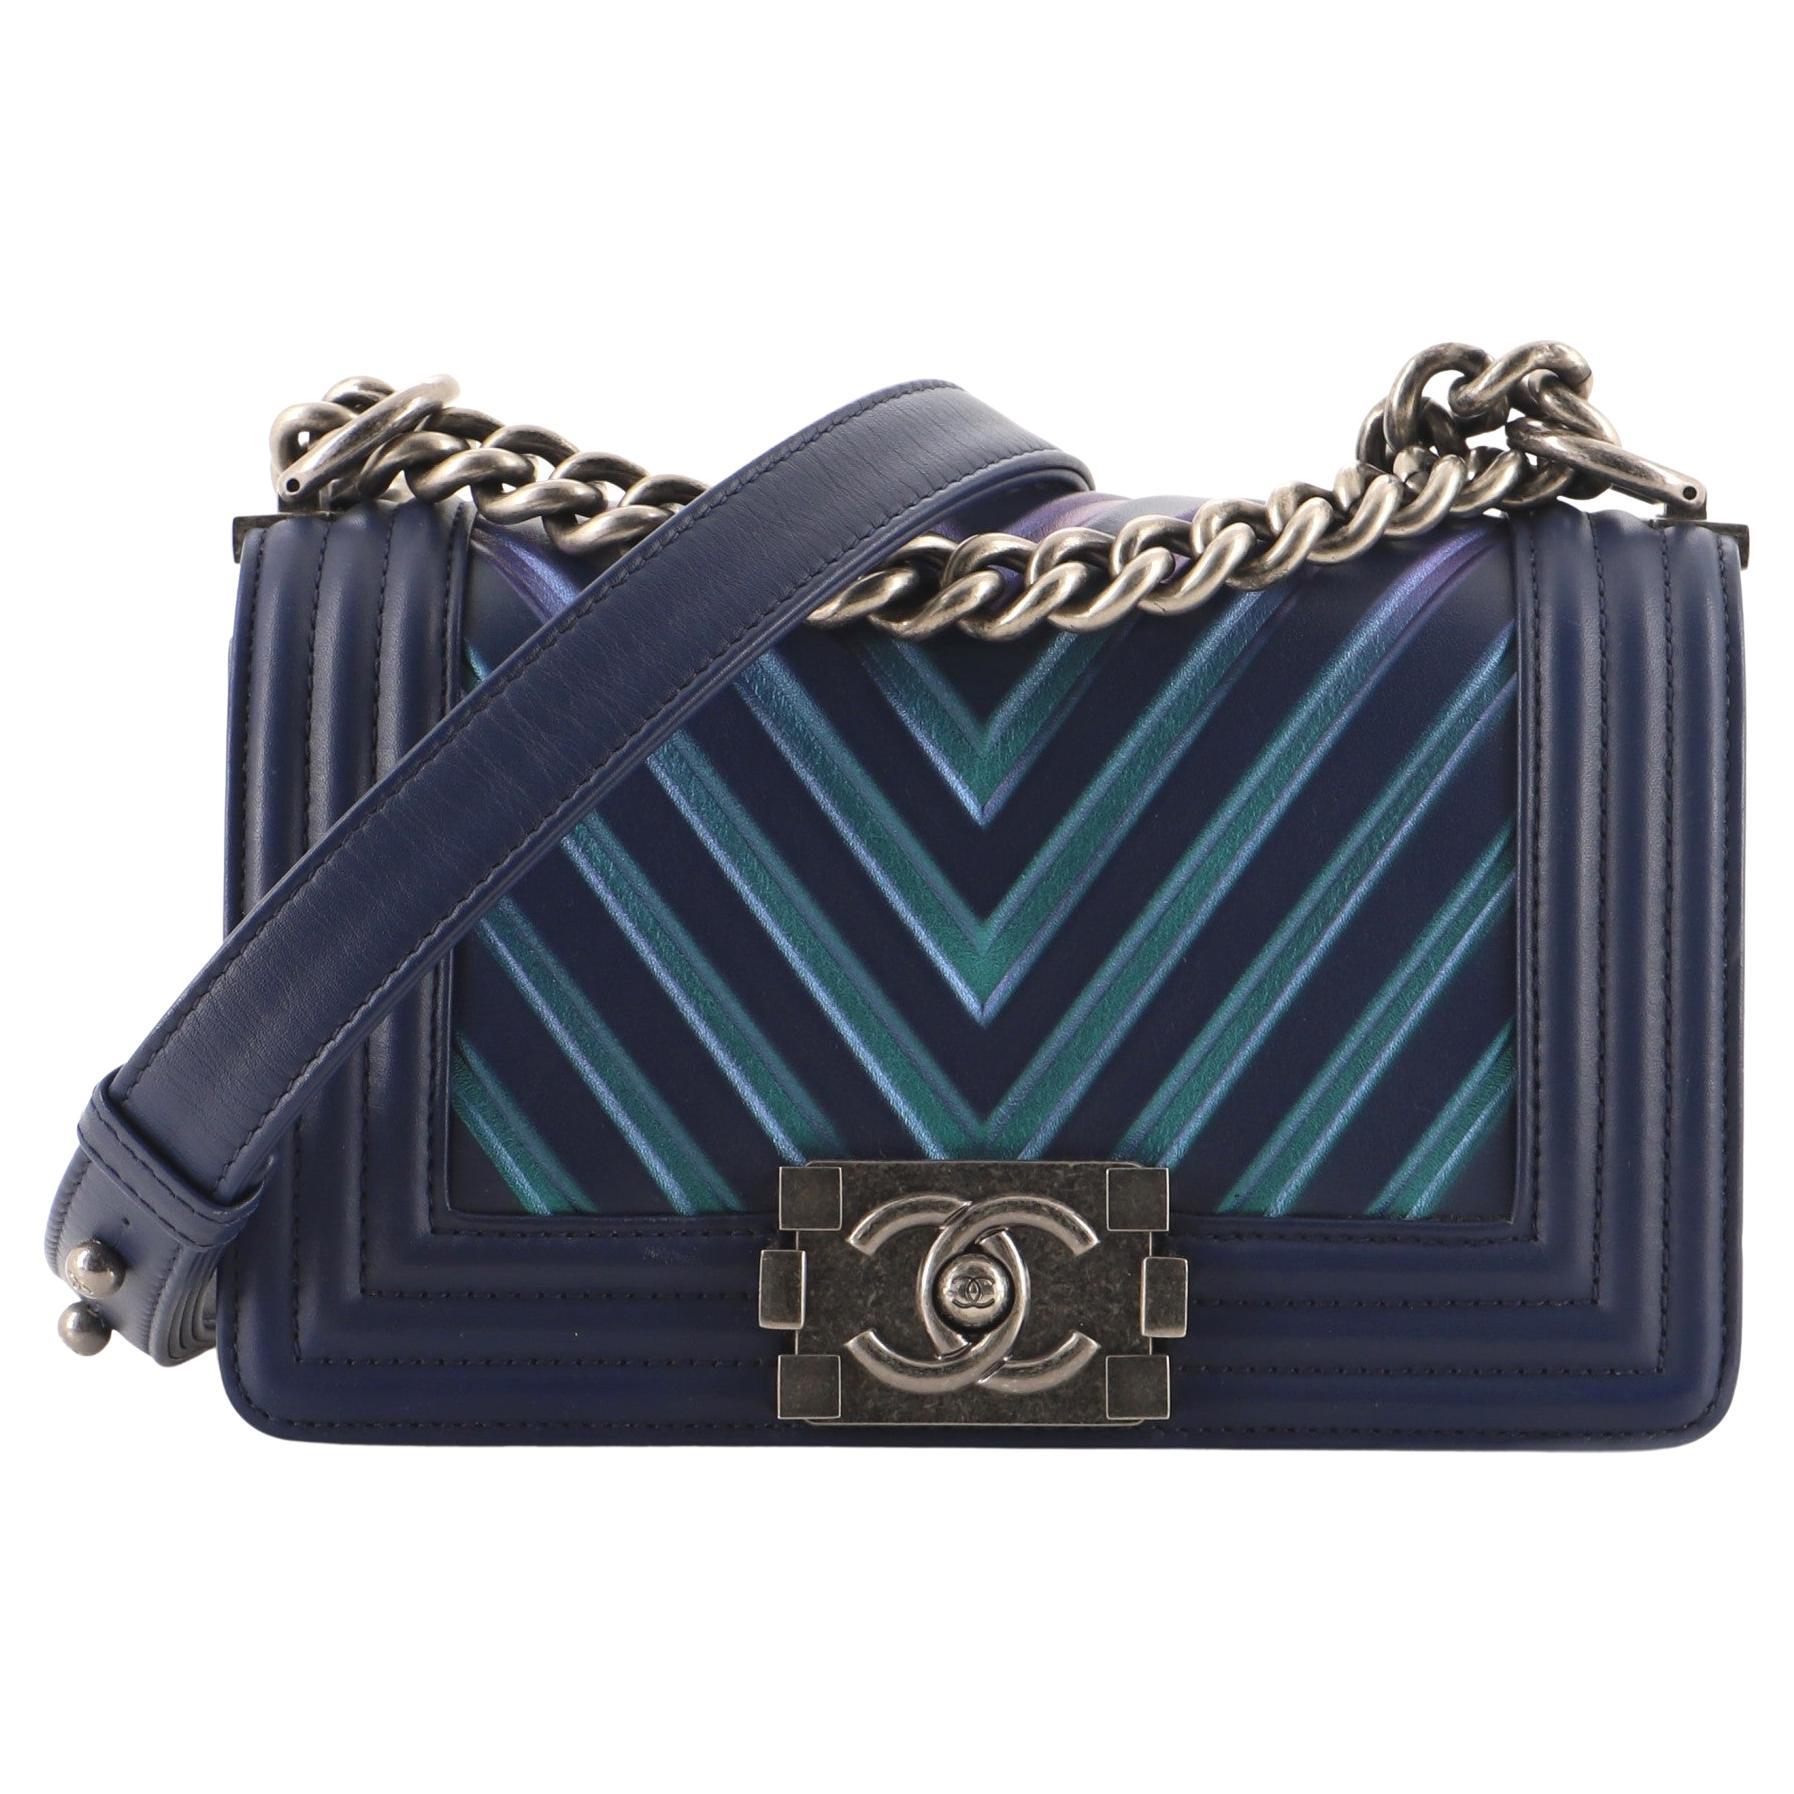 Holographic Chanel Bag - For Sale on 1stDibs